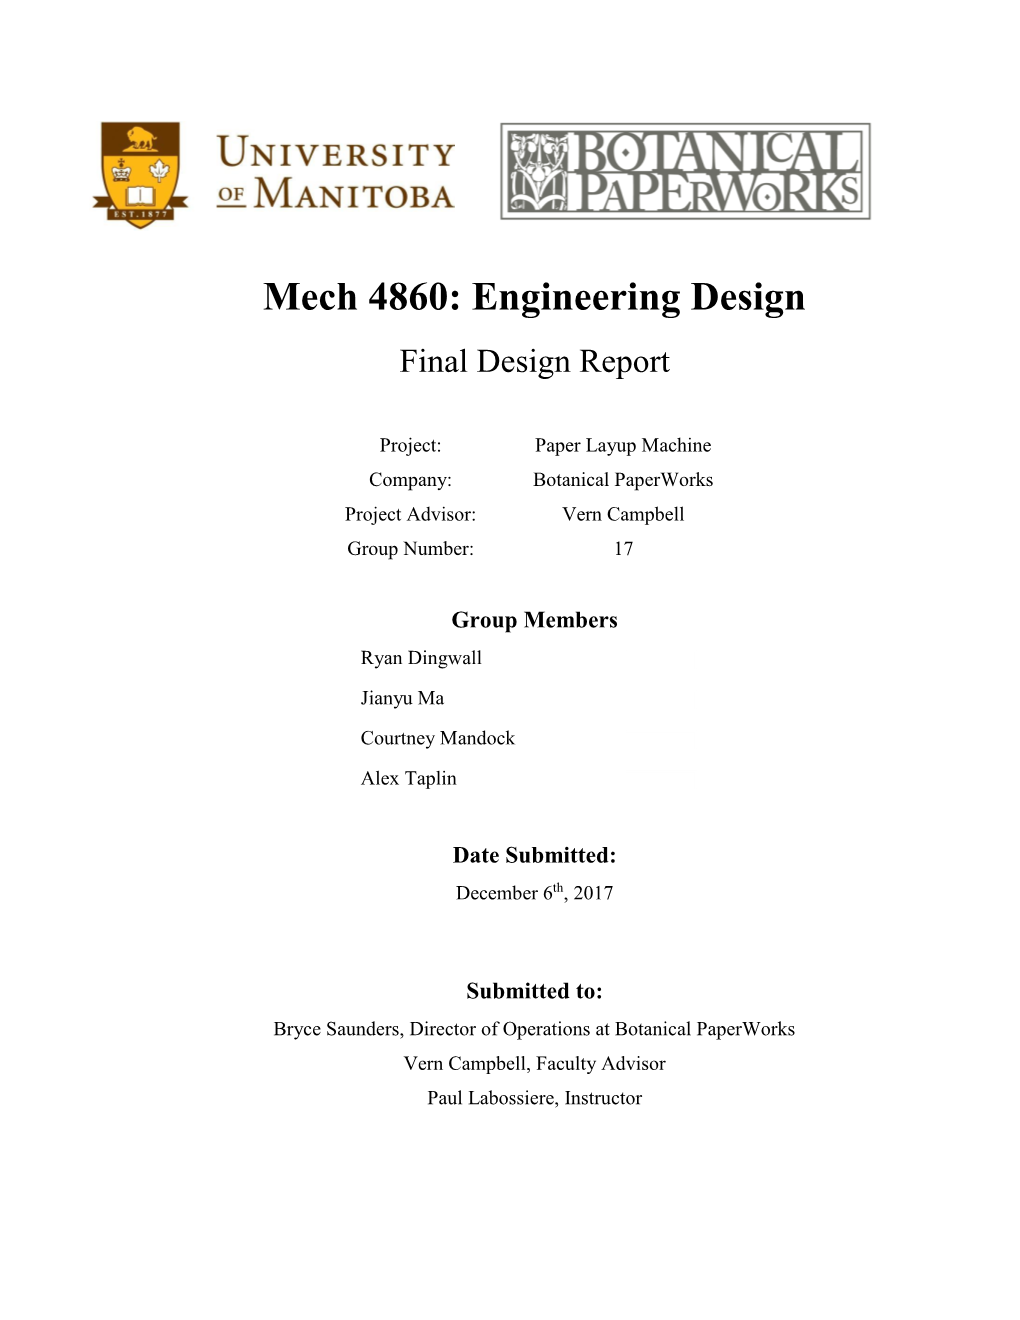 Mech 4860: Engineering Design Final Design Report